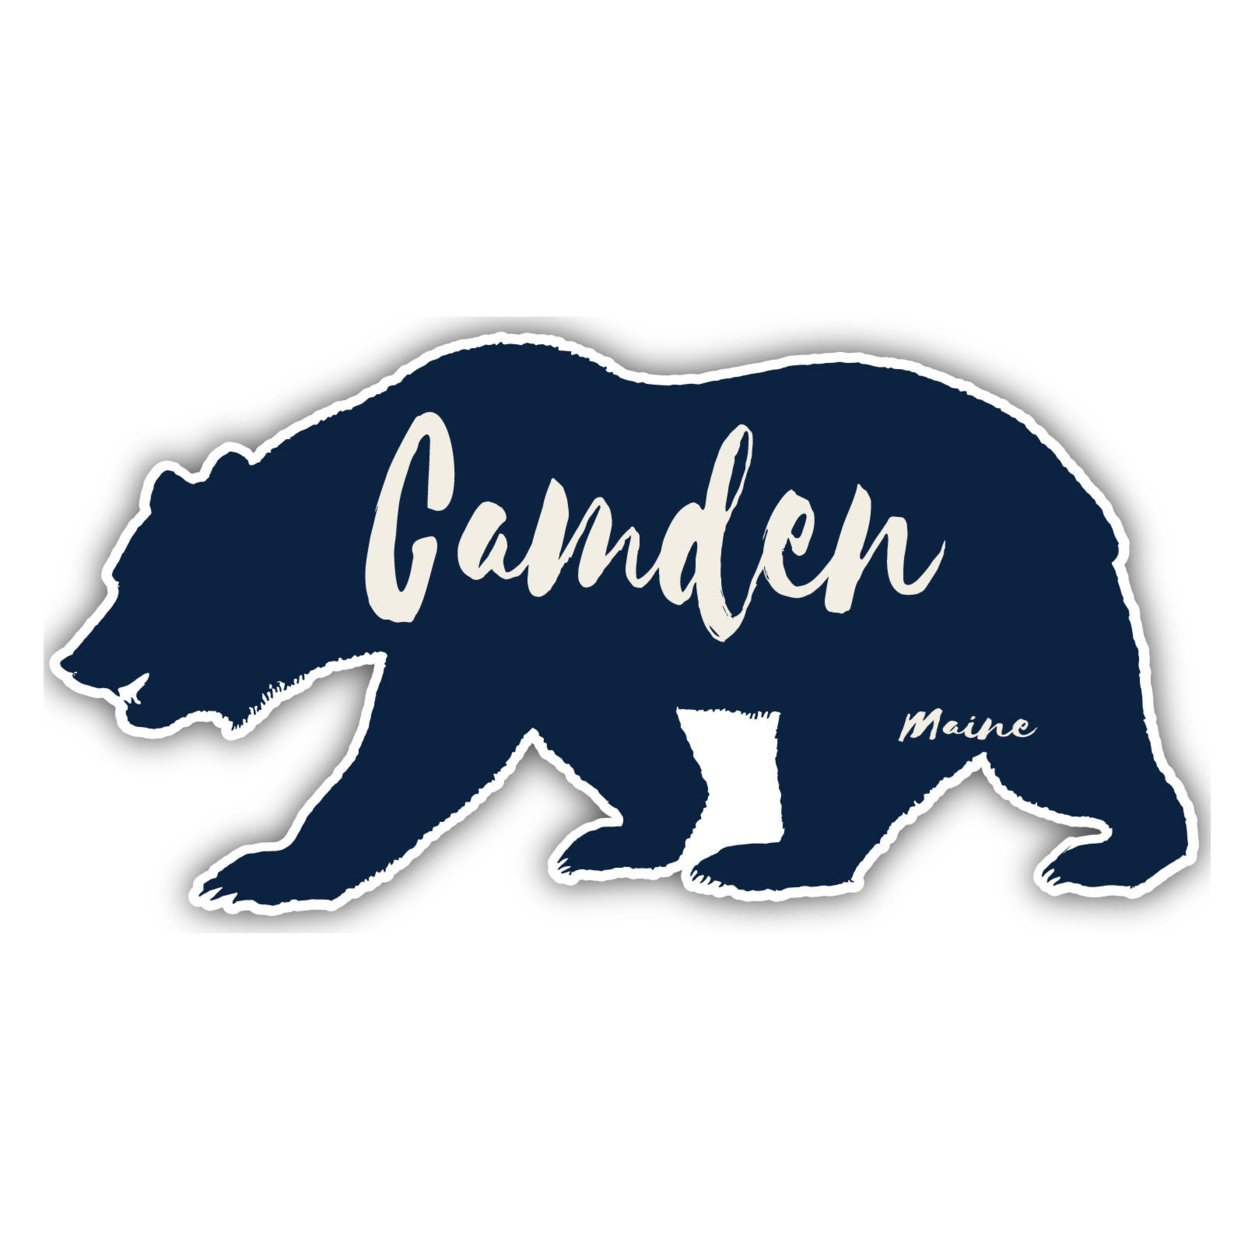 Camden Maine Souvenir Decorative Stickers (Choose Theme And Size) - Single Unit, 10-Inch, Bear